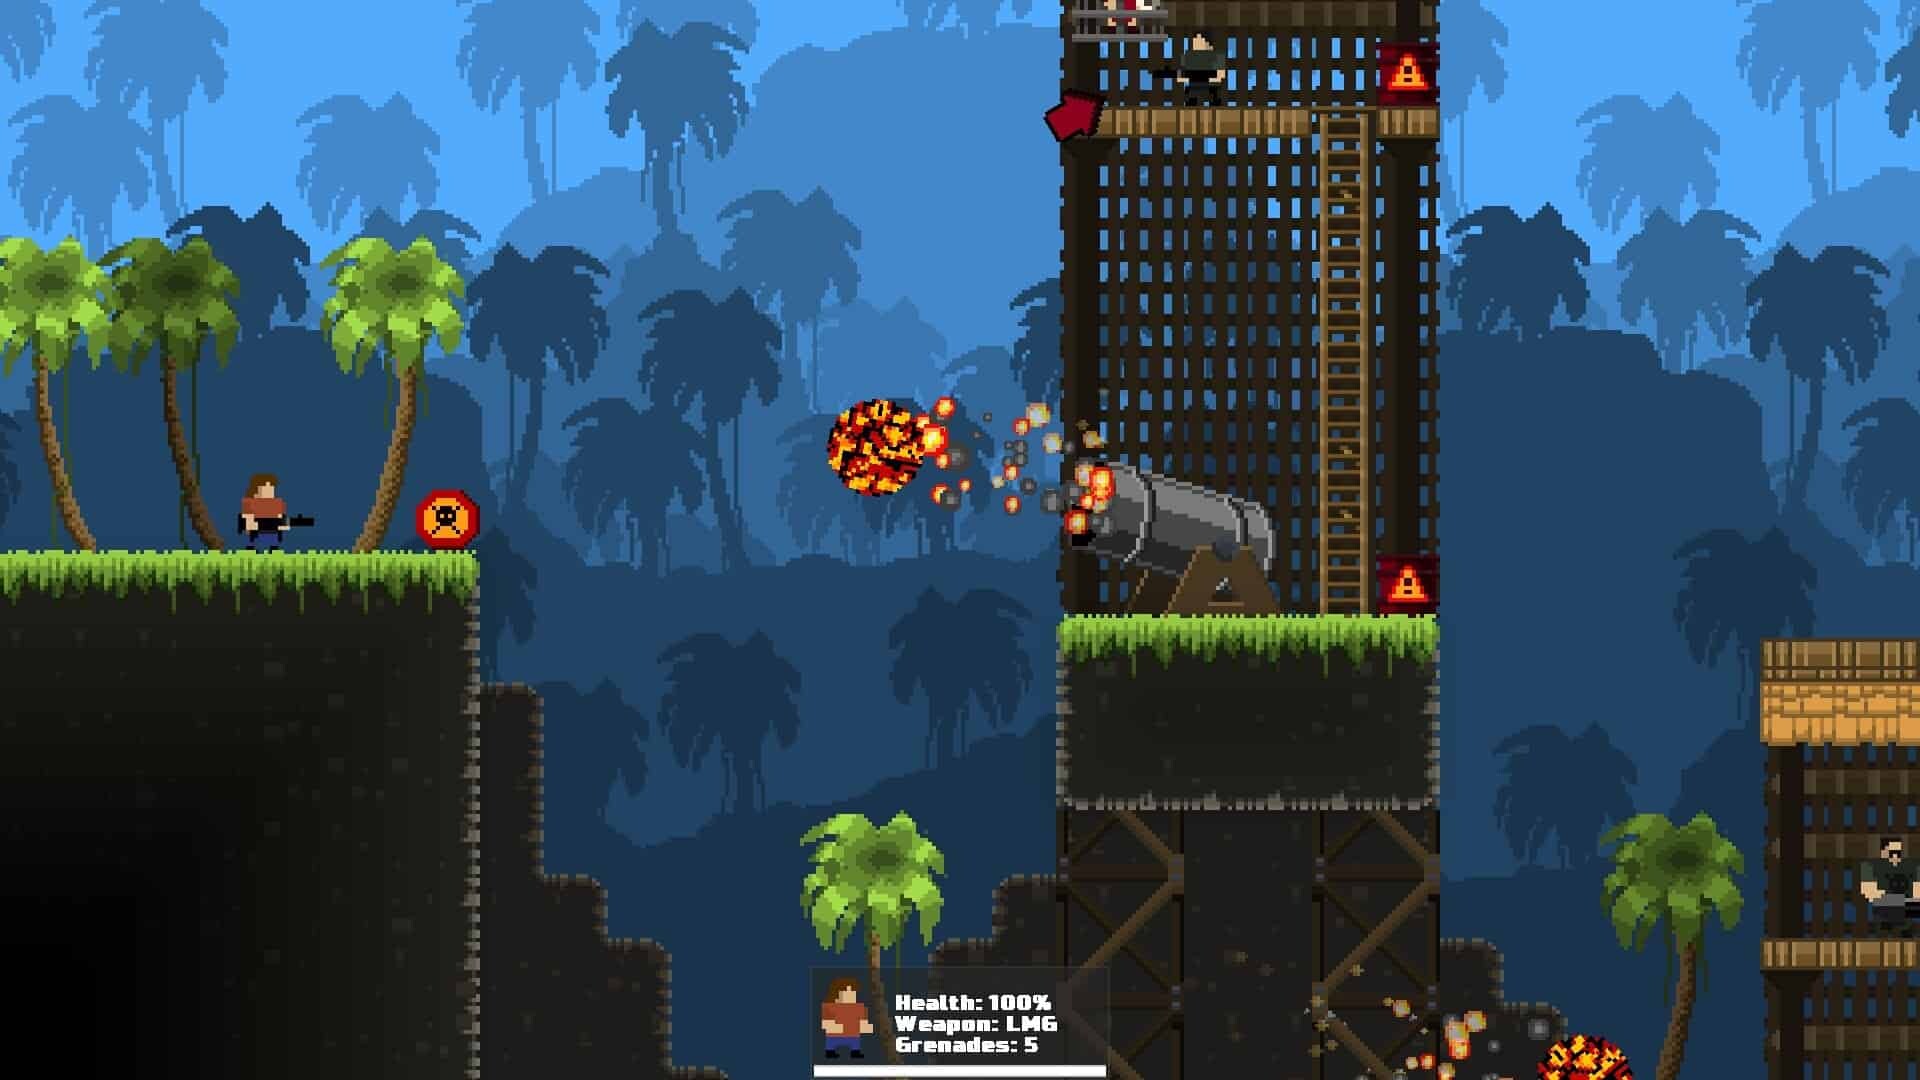 GunHero game screenshot, fireball cannon